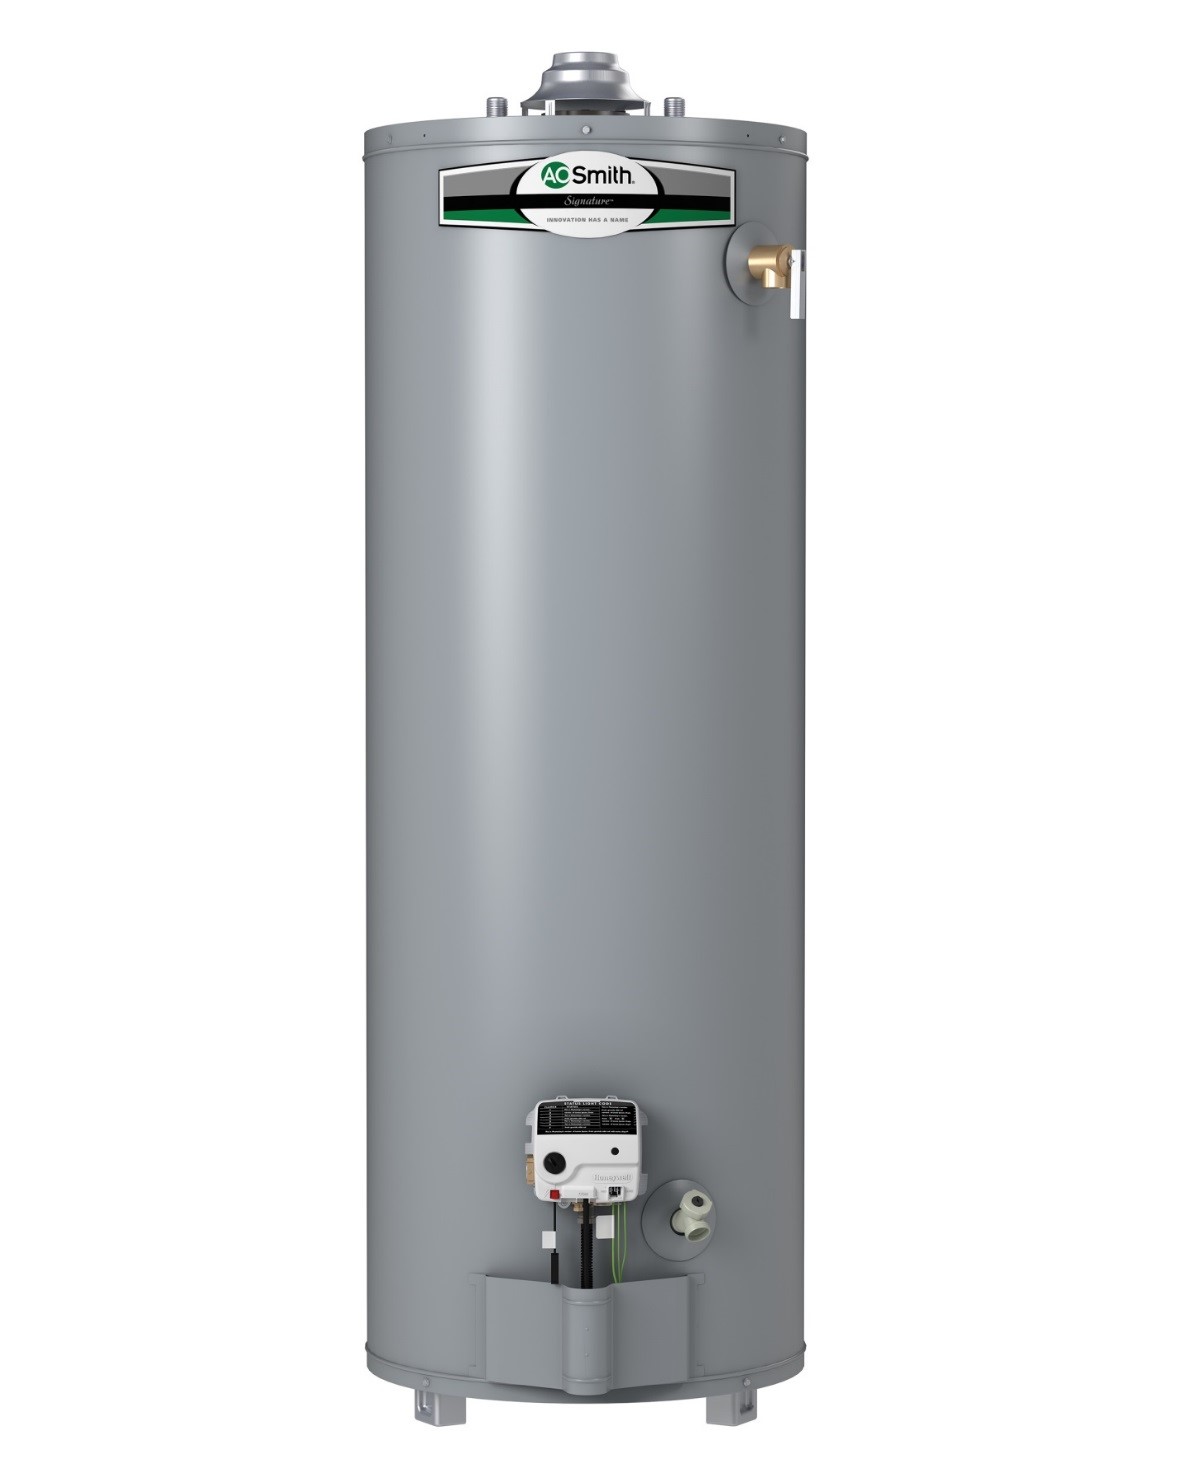 30 Gallon Water Heater G6-UT3030NV